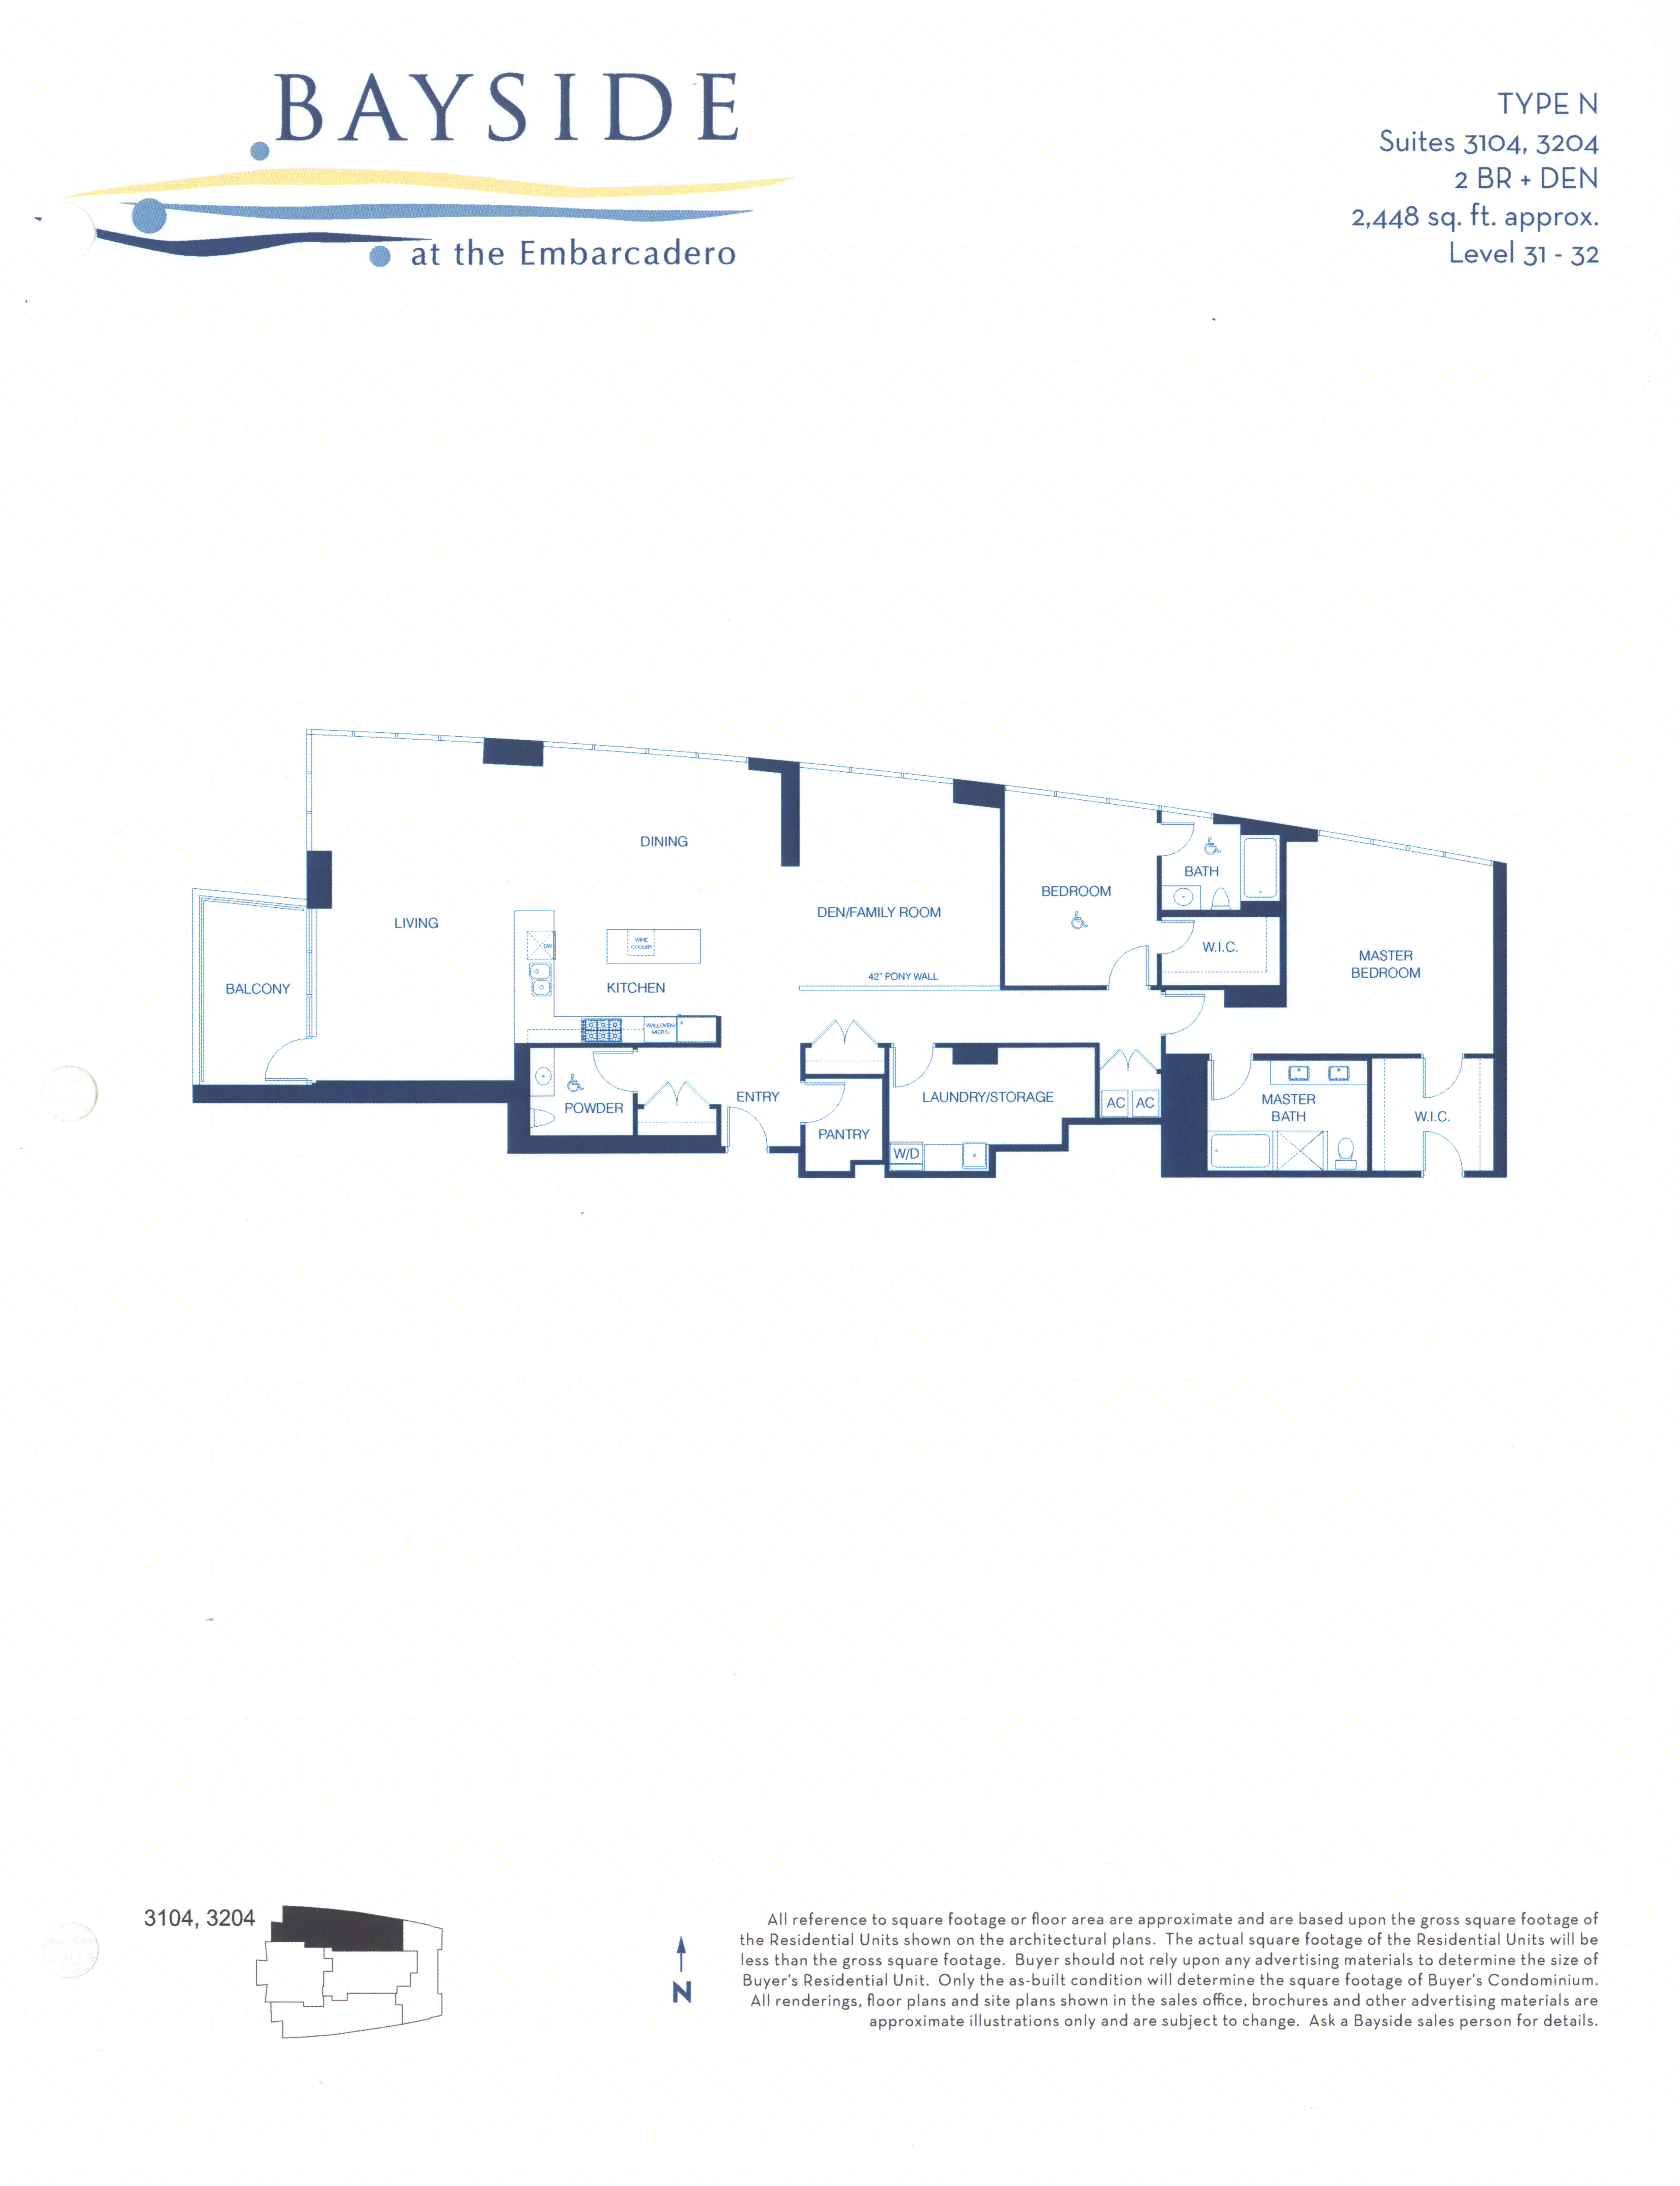 Bayside Floor Plan Level 31- 32 Type N